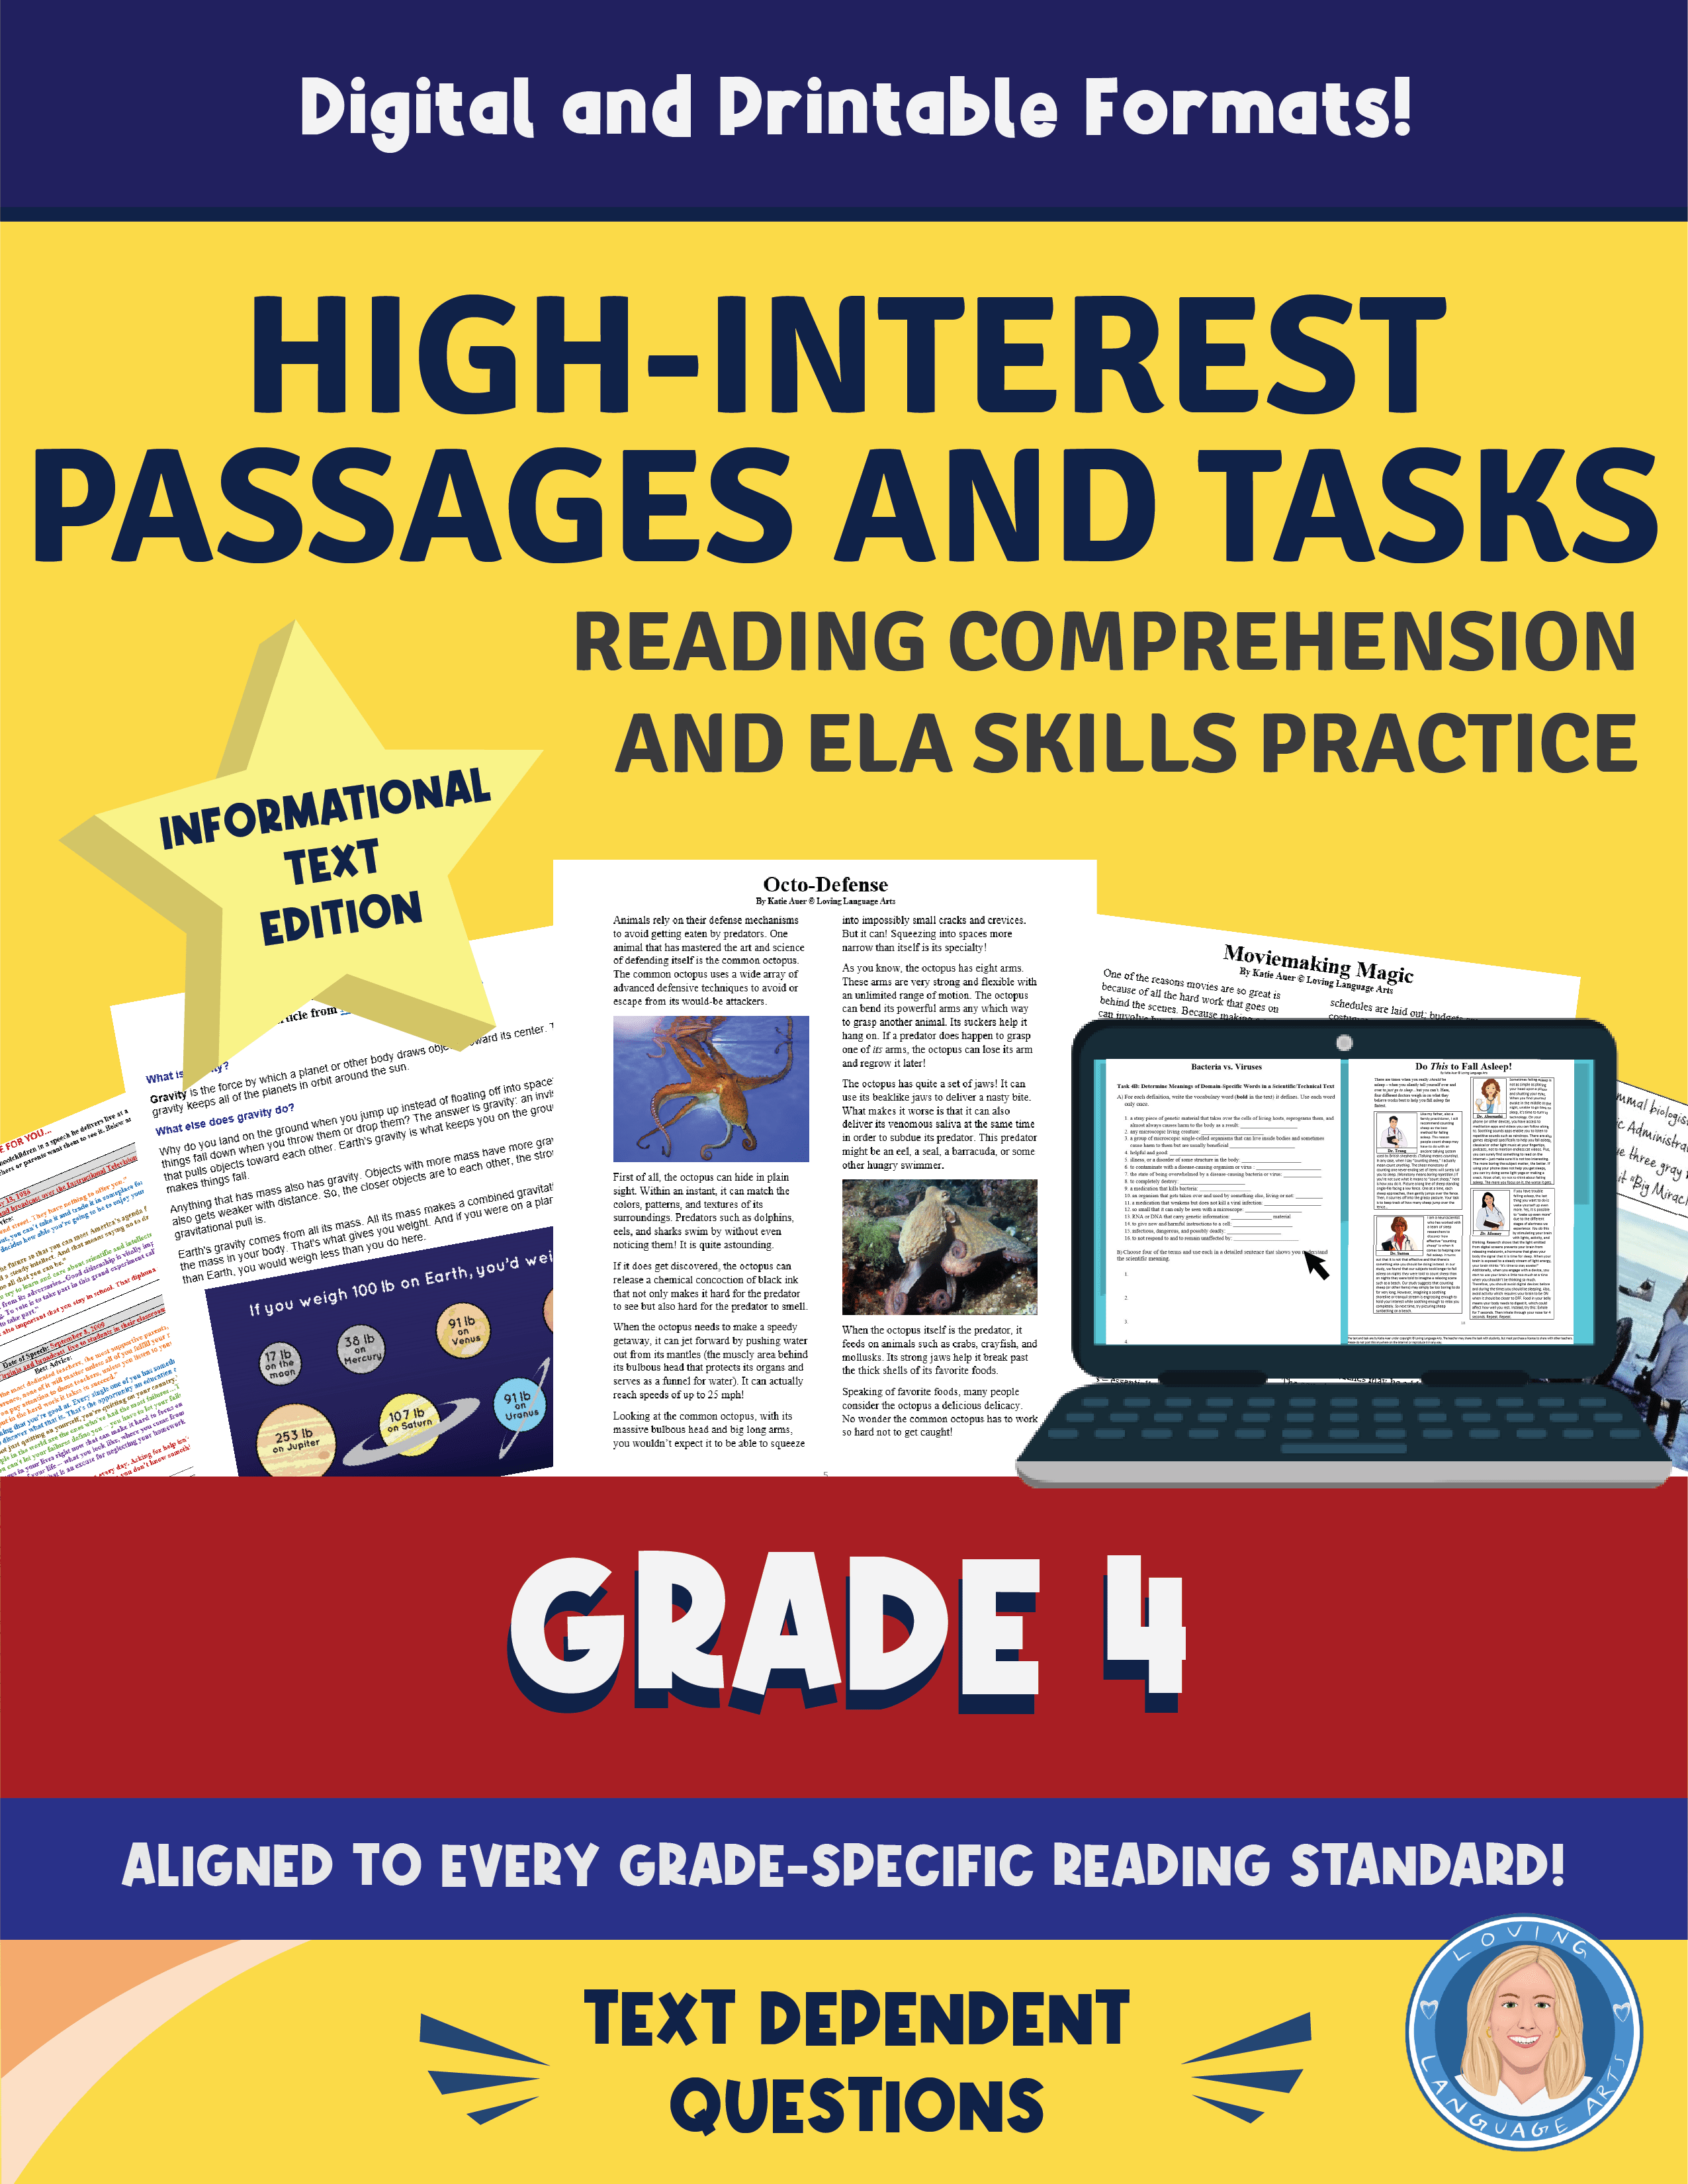 4th grade language arts workbook - High-interest passages and tasks.